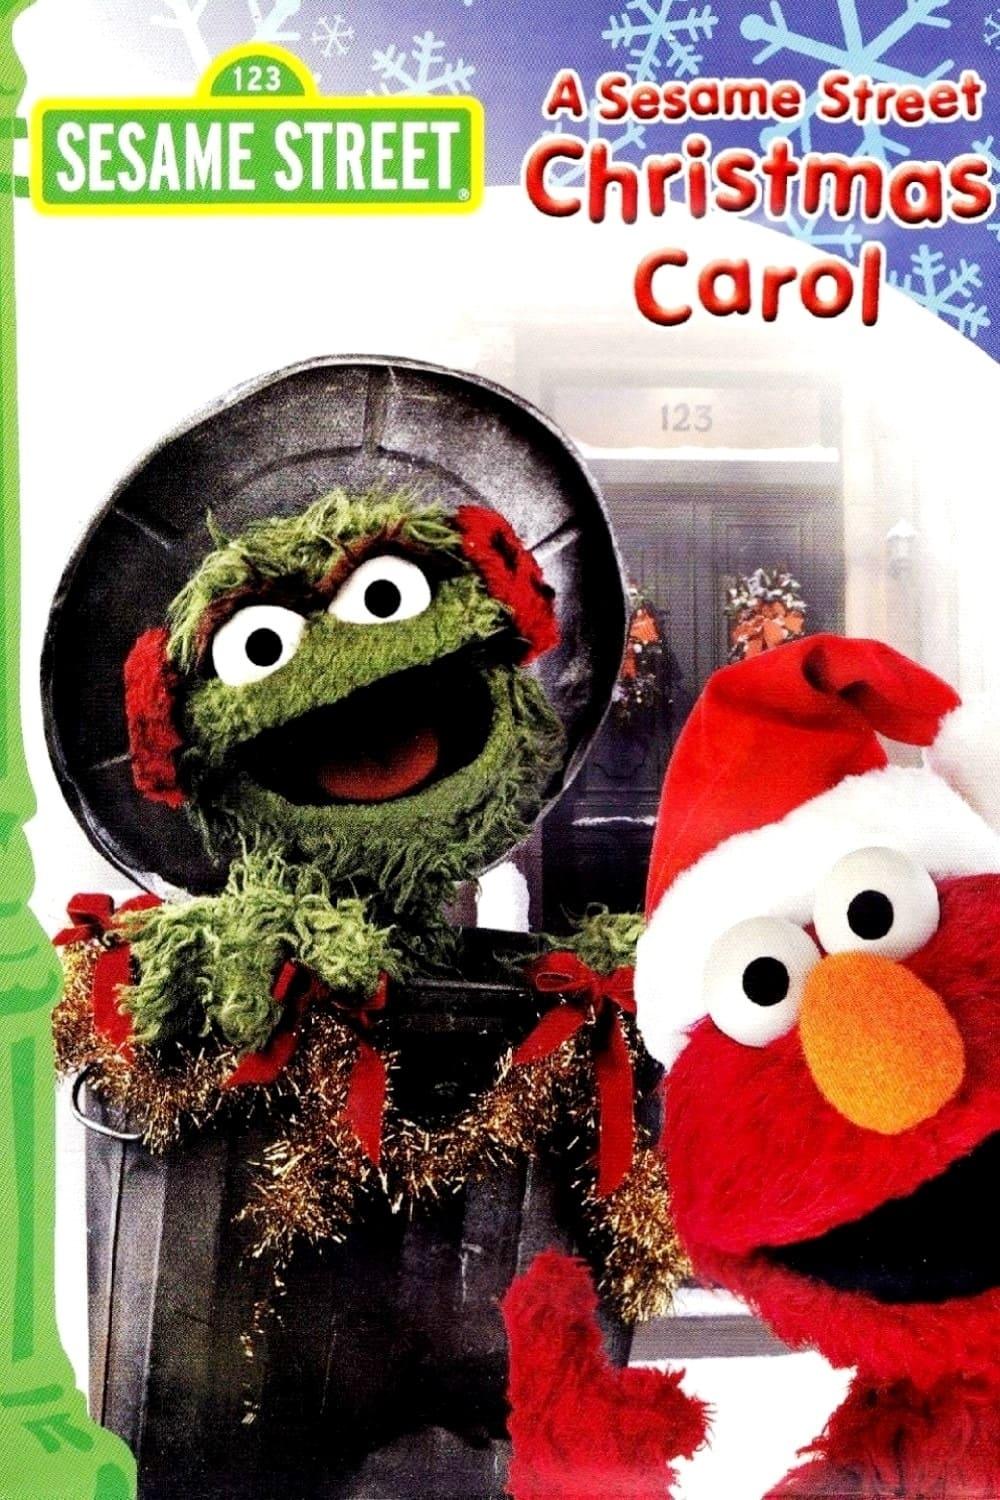 A Sesame Street Christmas Carol poster